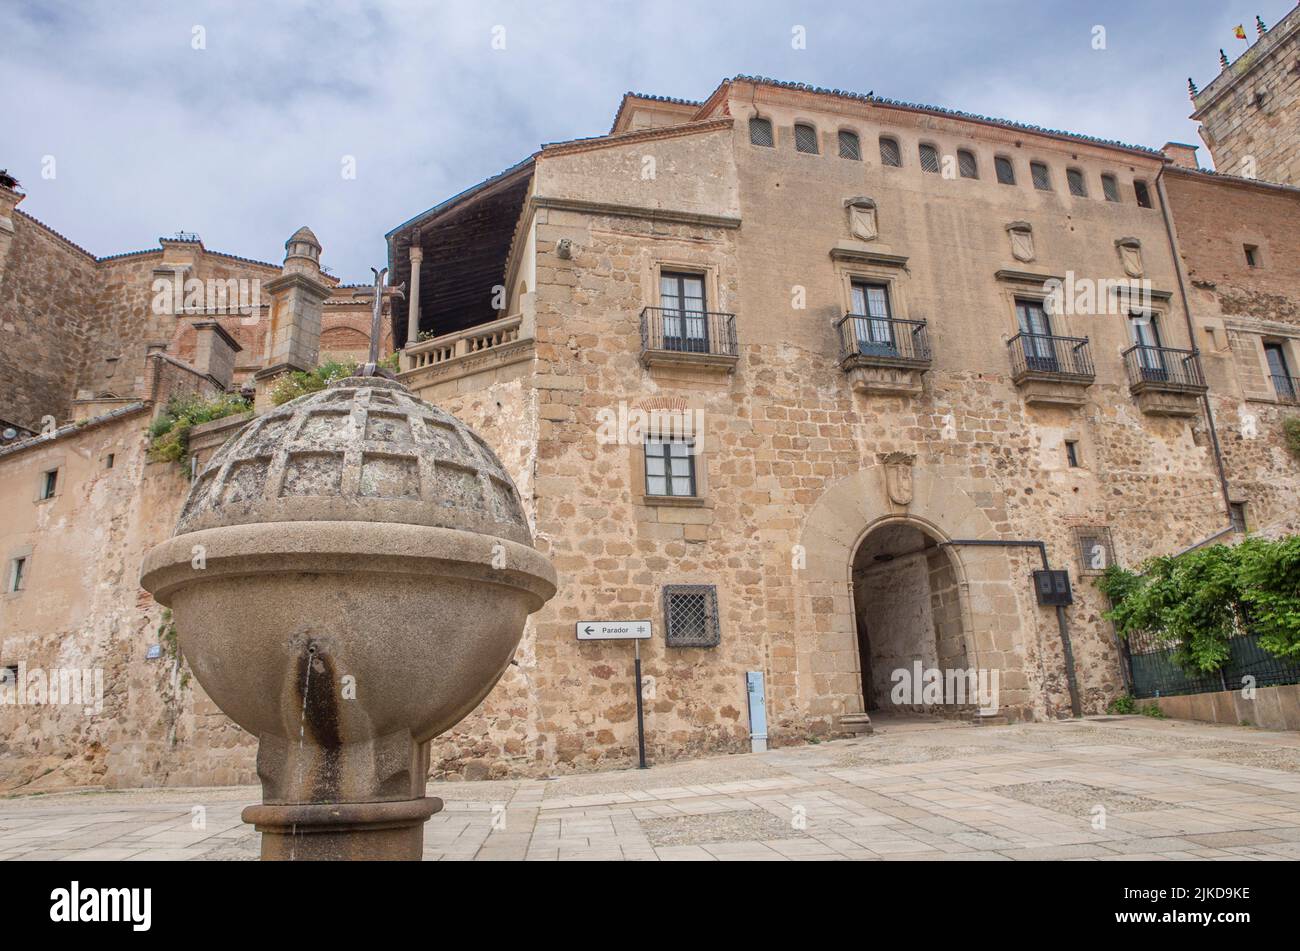 Plaza de San Nicolás, calle medieval en el casco antiguo de Plasencia, Cáceres, Extremadura, España. Foto de stock